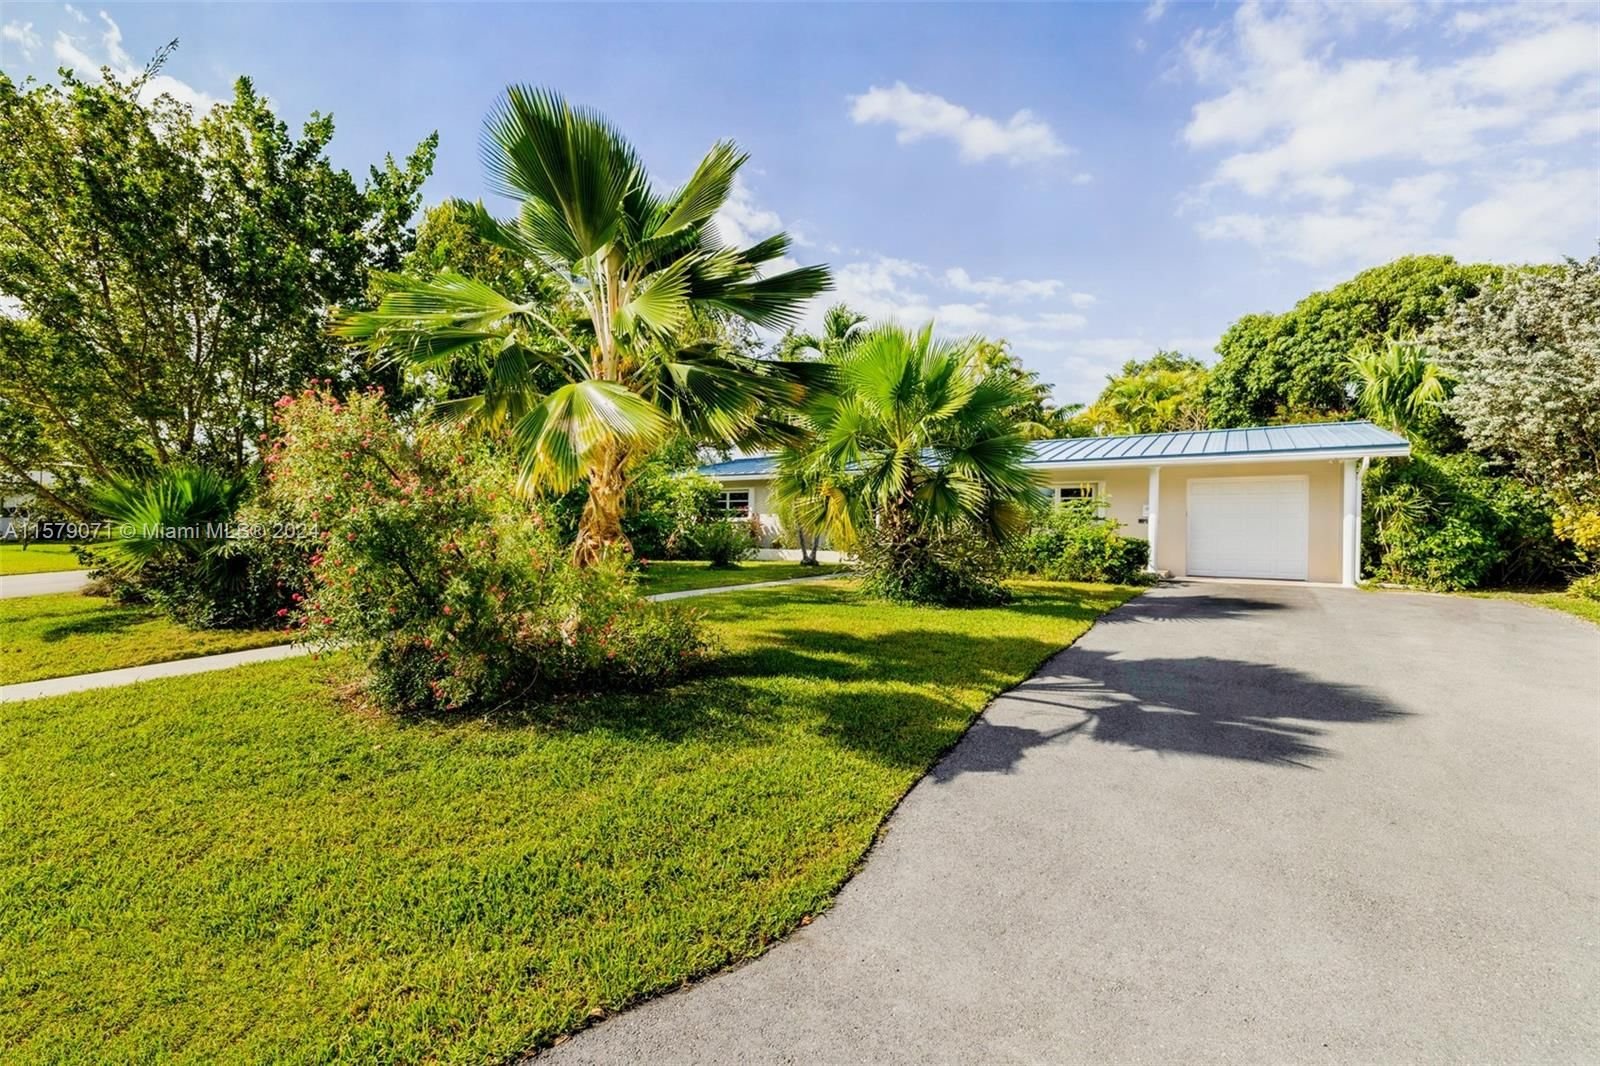 Real estate property located at 15650 88th Ave, Miami-Dade County, CORAL REEF ESTATES, Palmetto Bay, FL